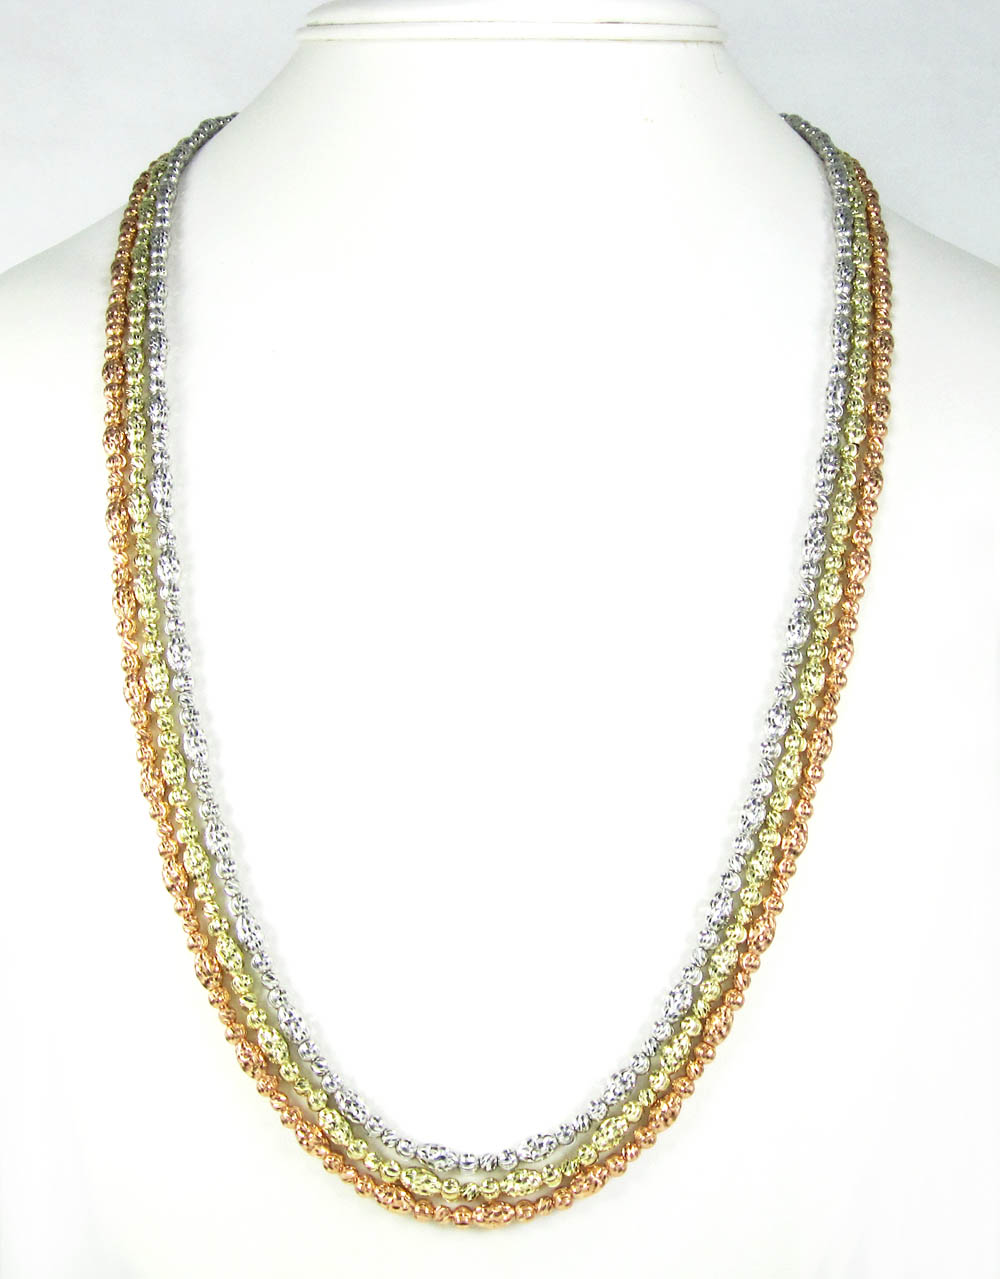 14k gold diamond cut oval bead chain 30 inch 4mm